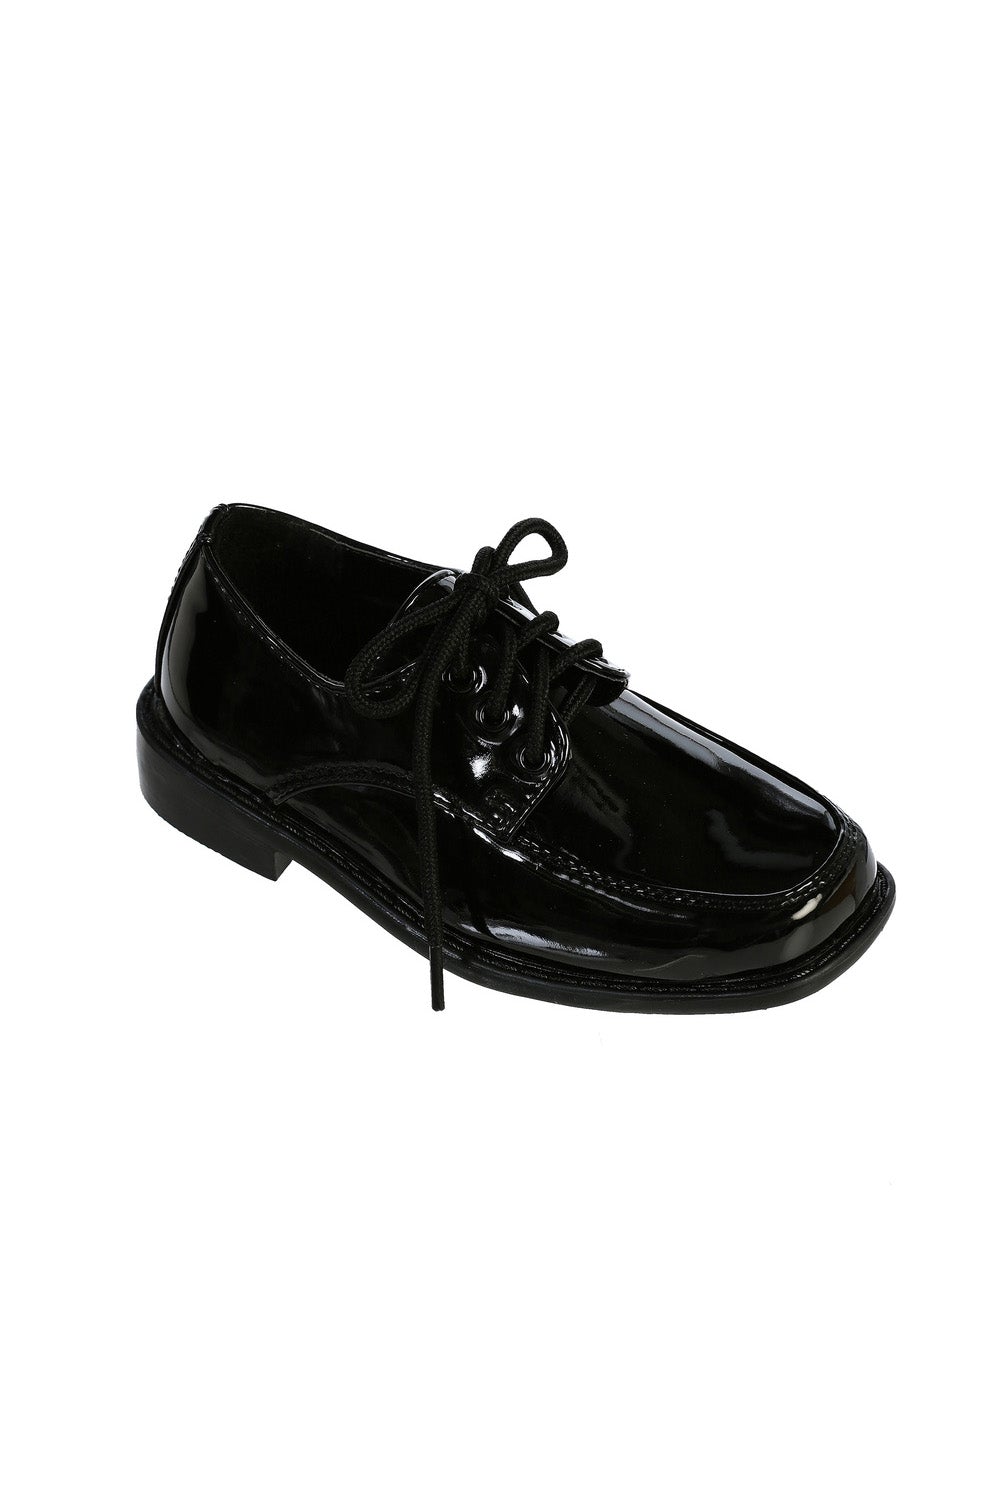 Tip Top "Pasadena" Kids Black Moc-Toe Lace Up Tuxedo Shoes